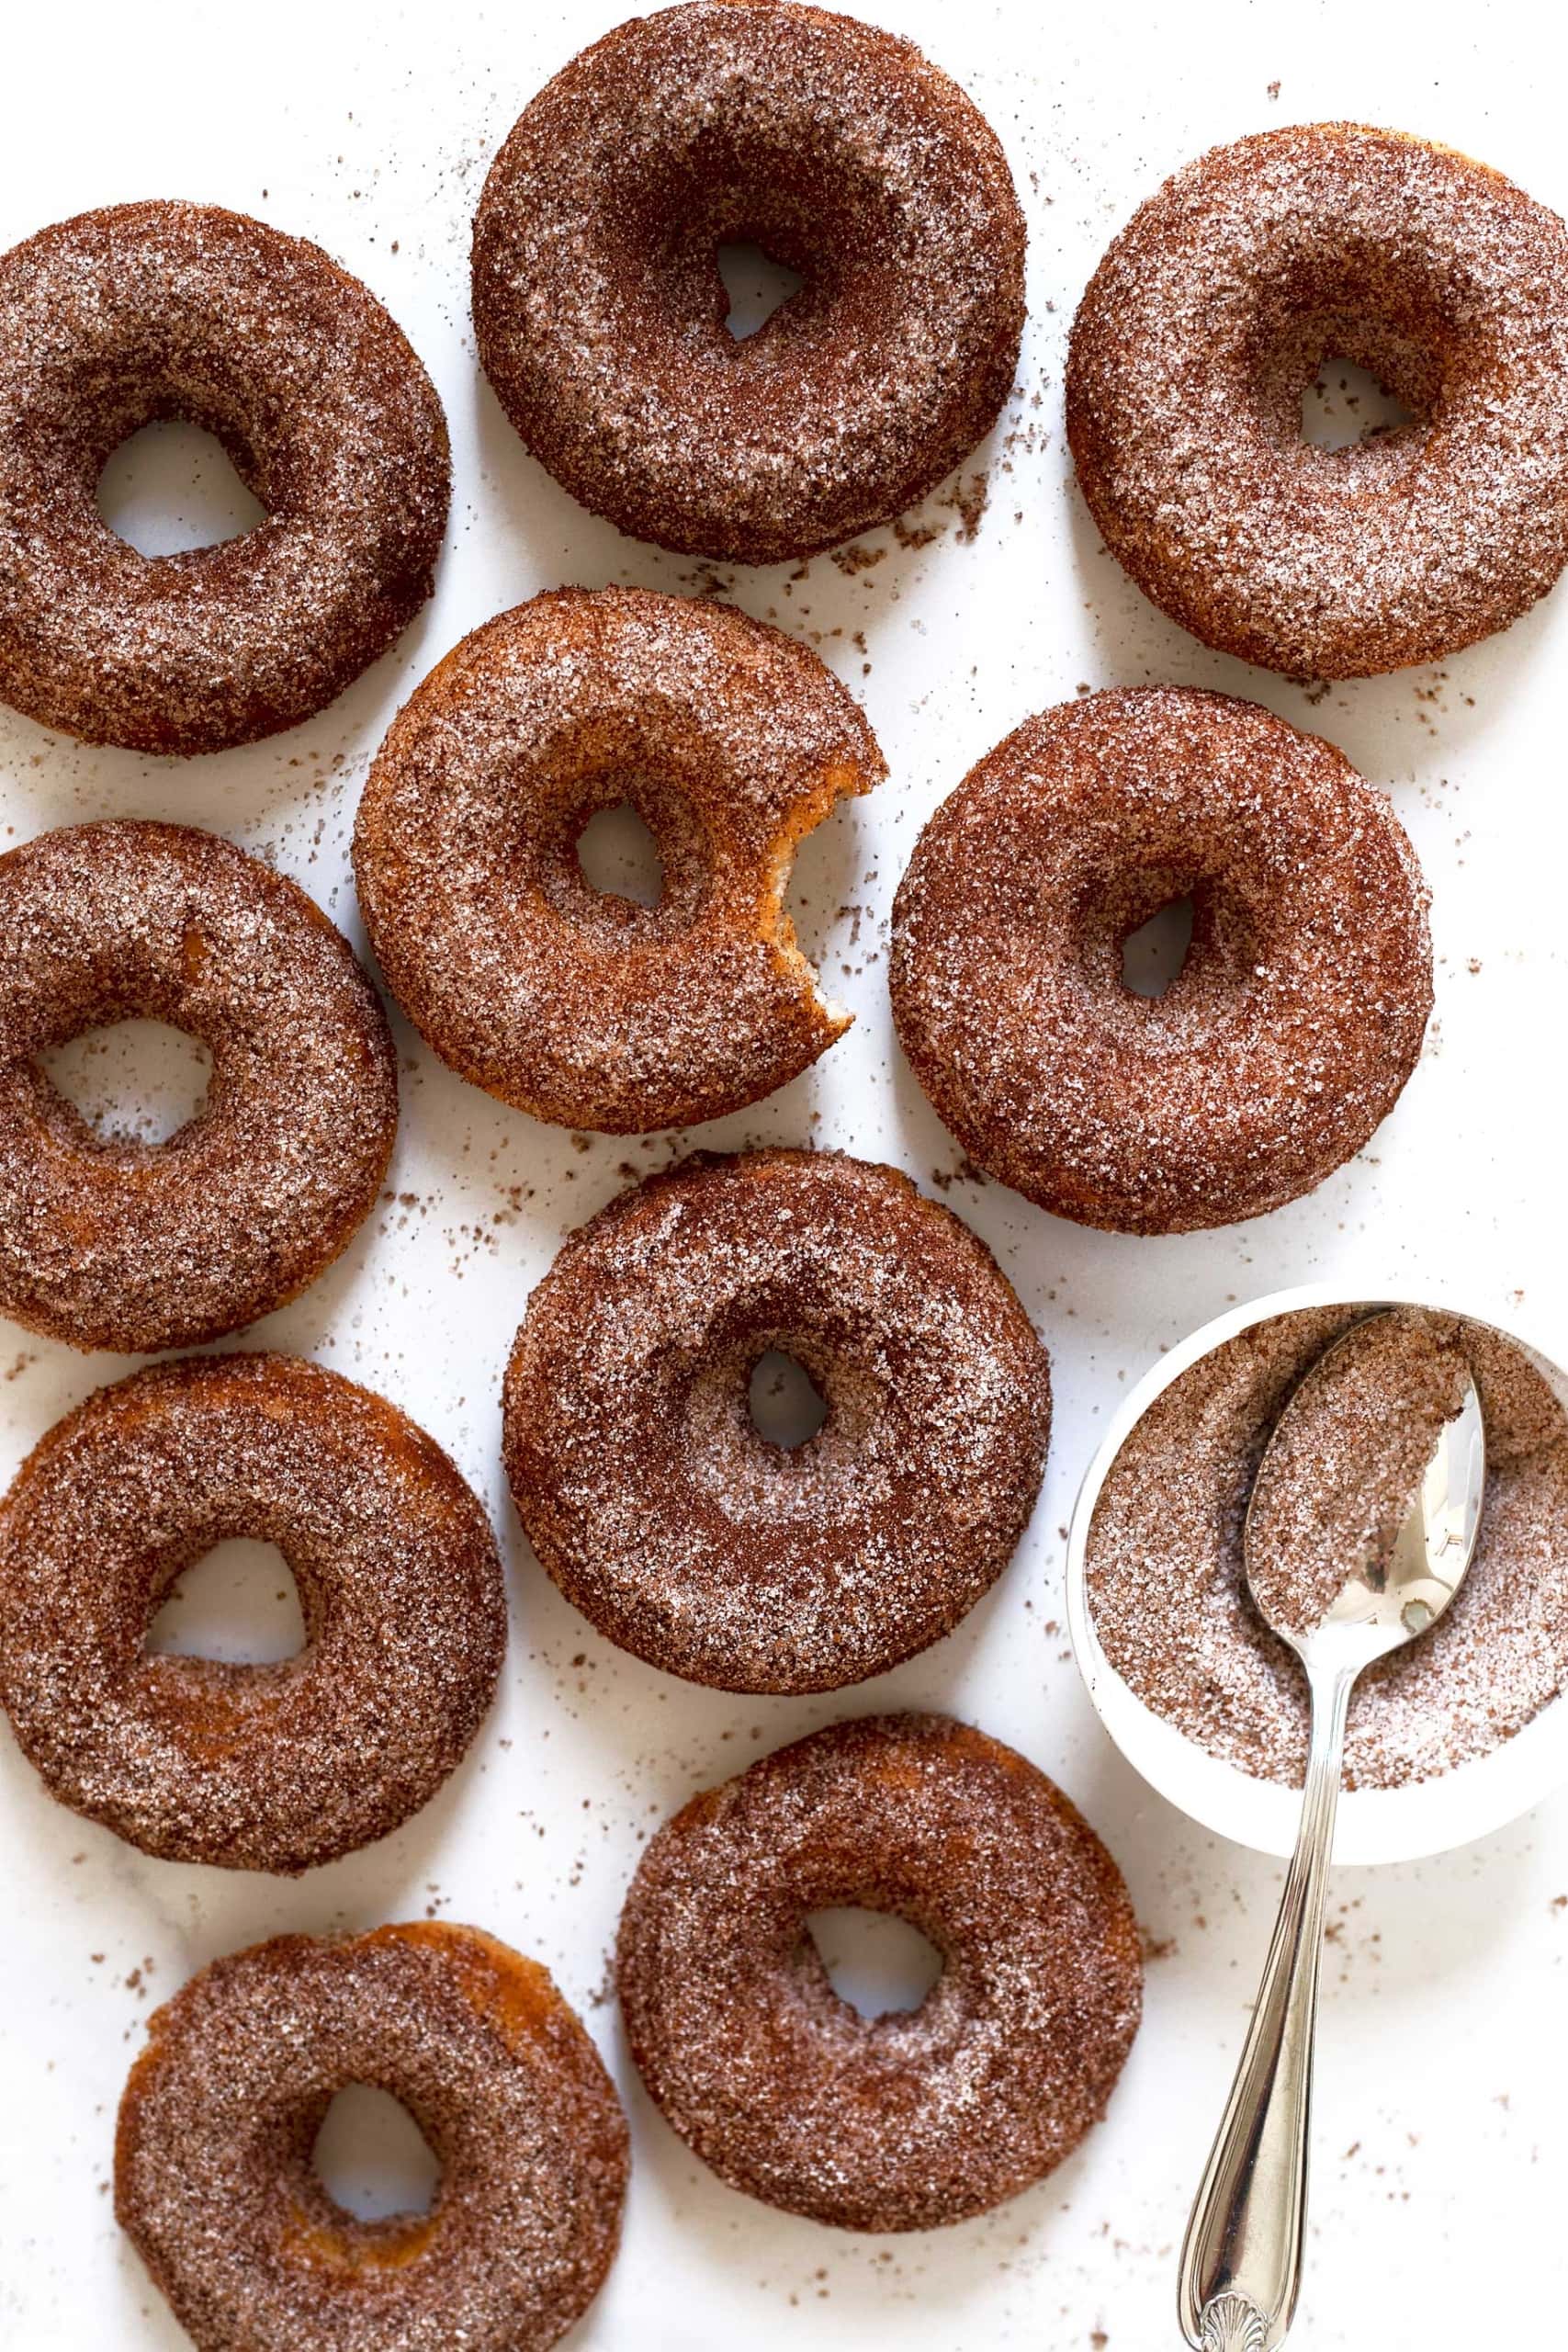 Cinnamon Sugar Donuts with cinnamon on a bowl